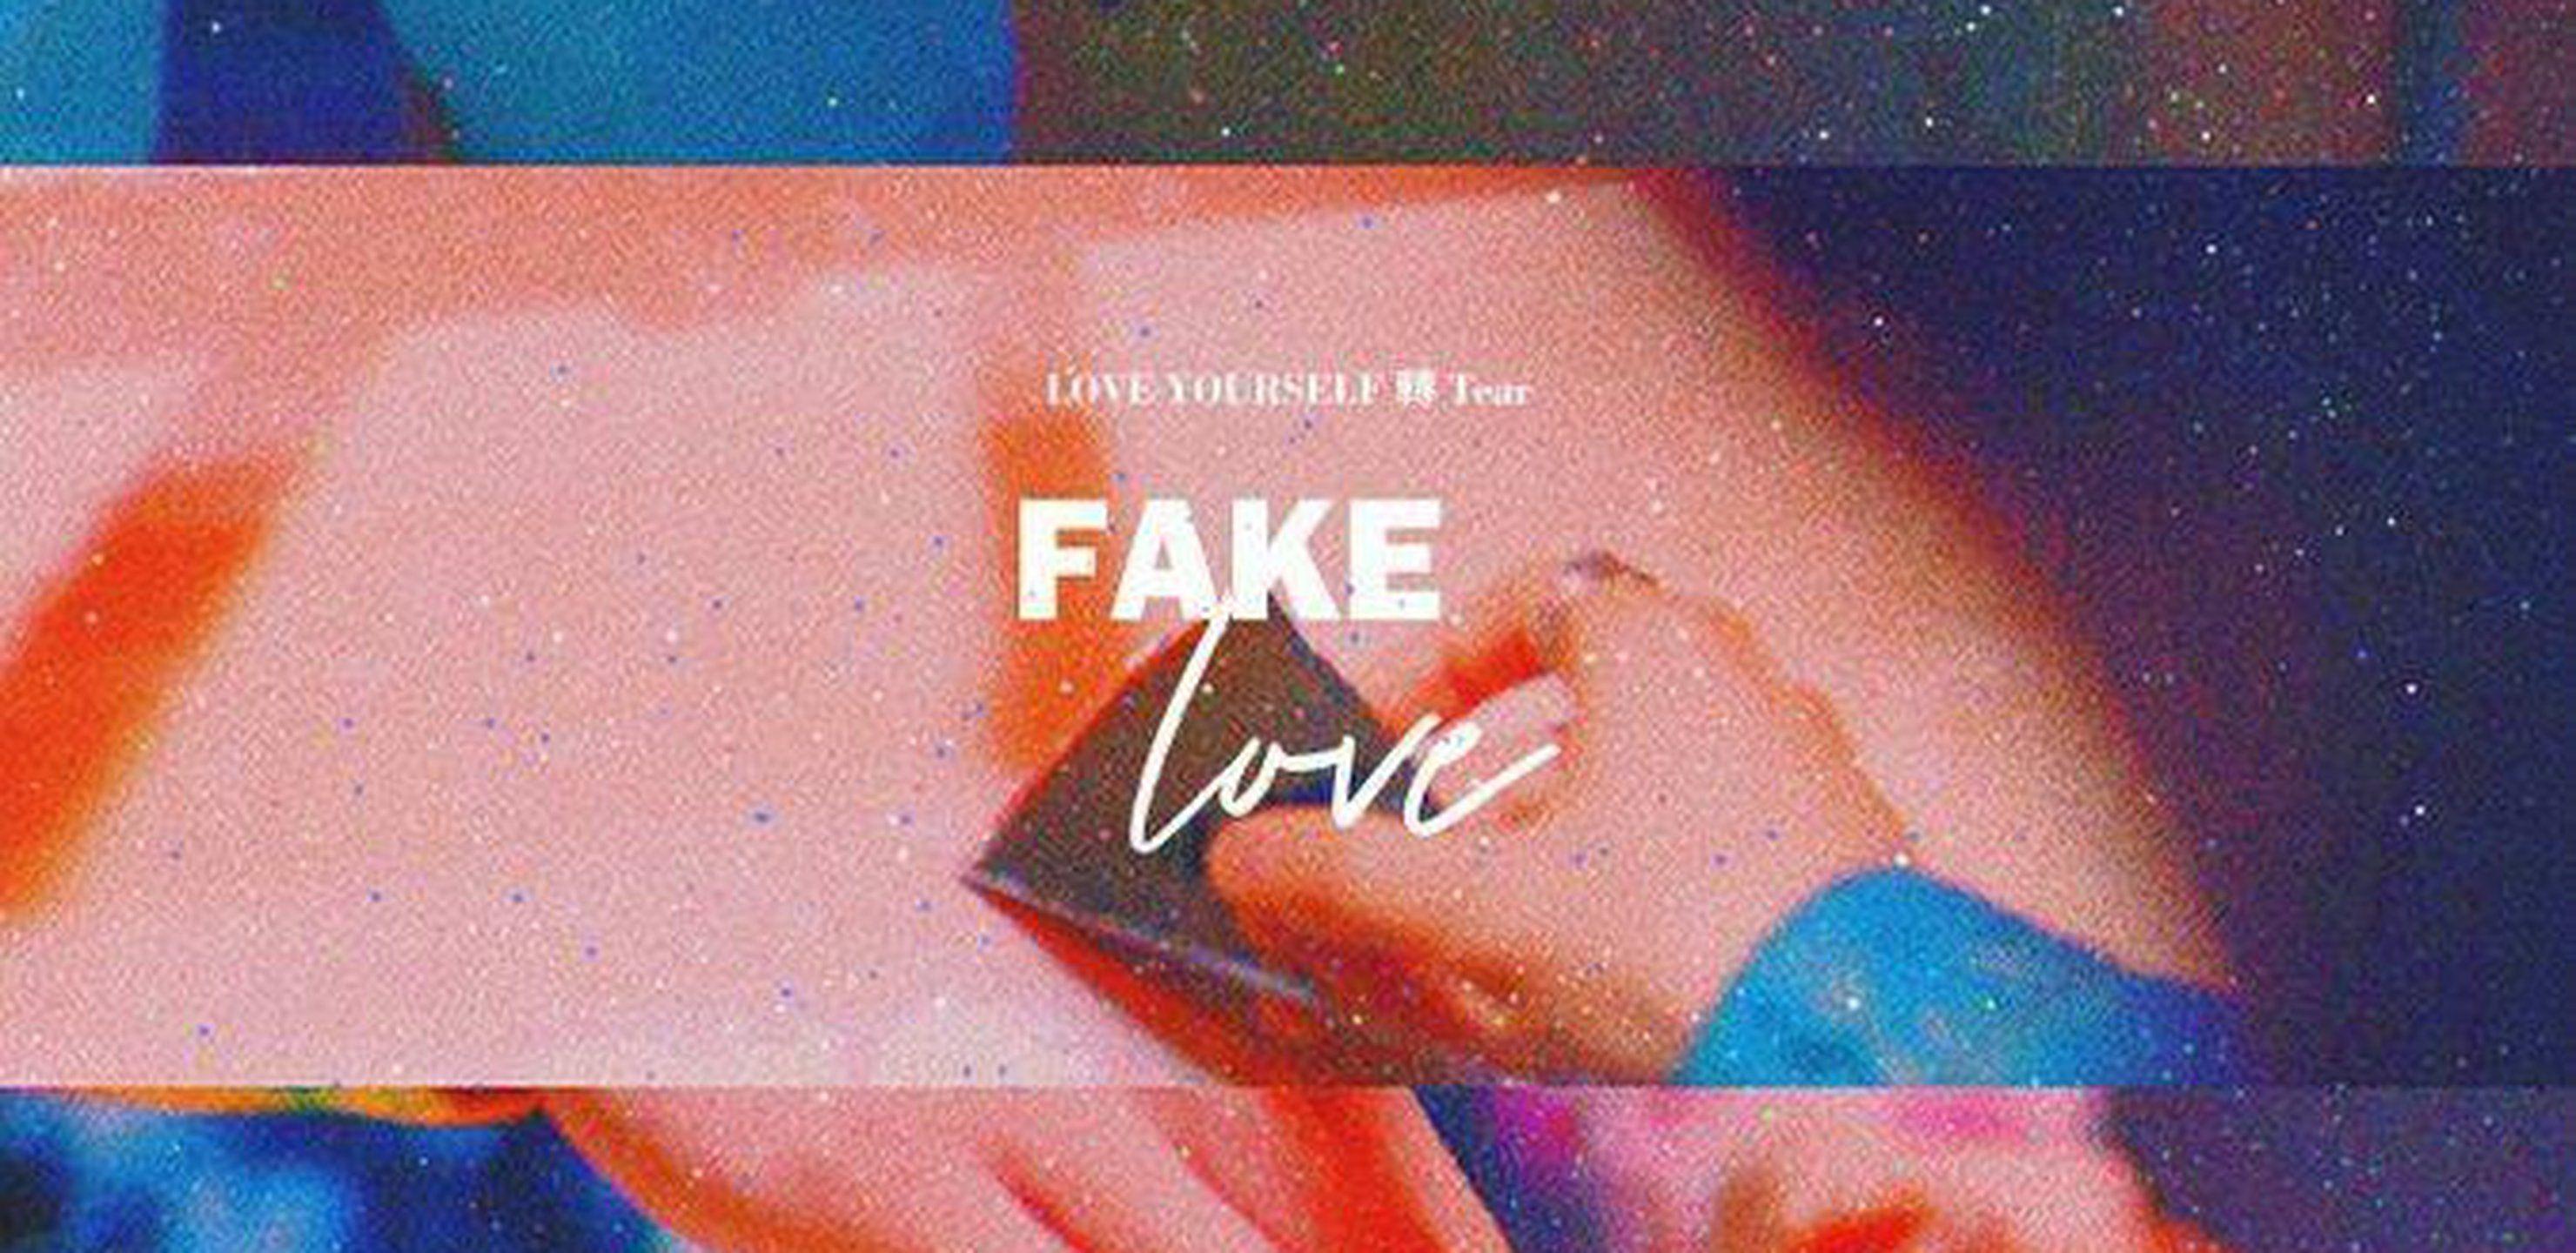 Samsung Galaxy S8 Fake Love by BTS Wallpaper, Music Wallpaper